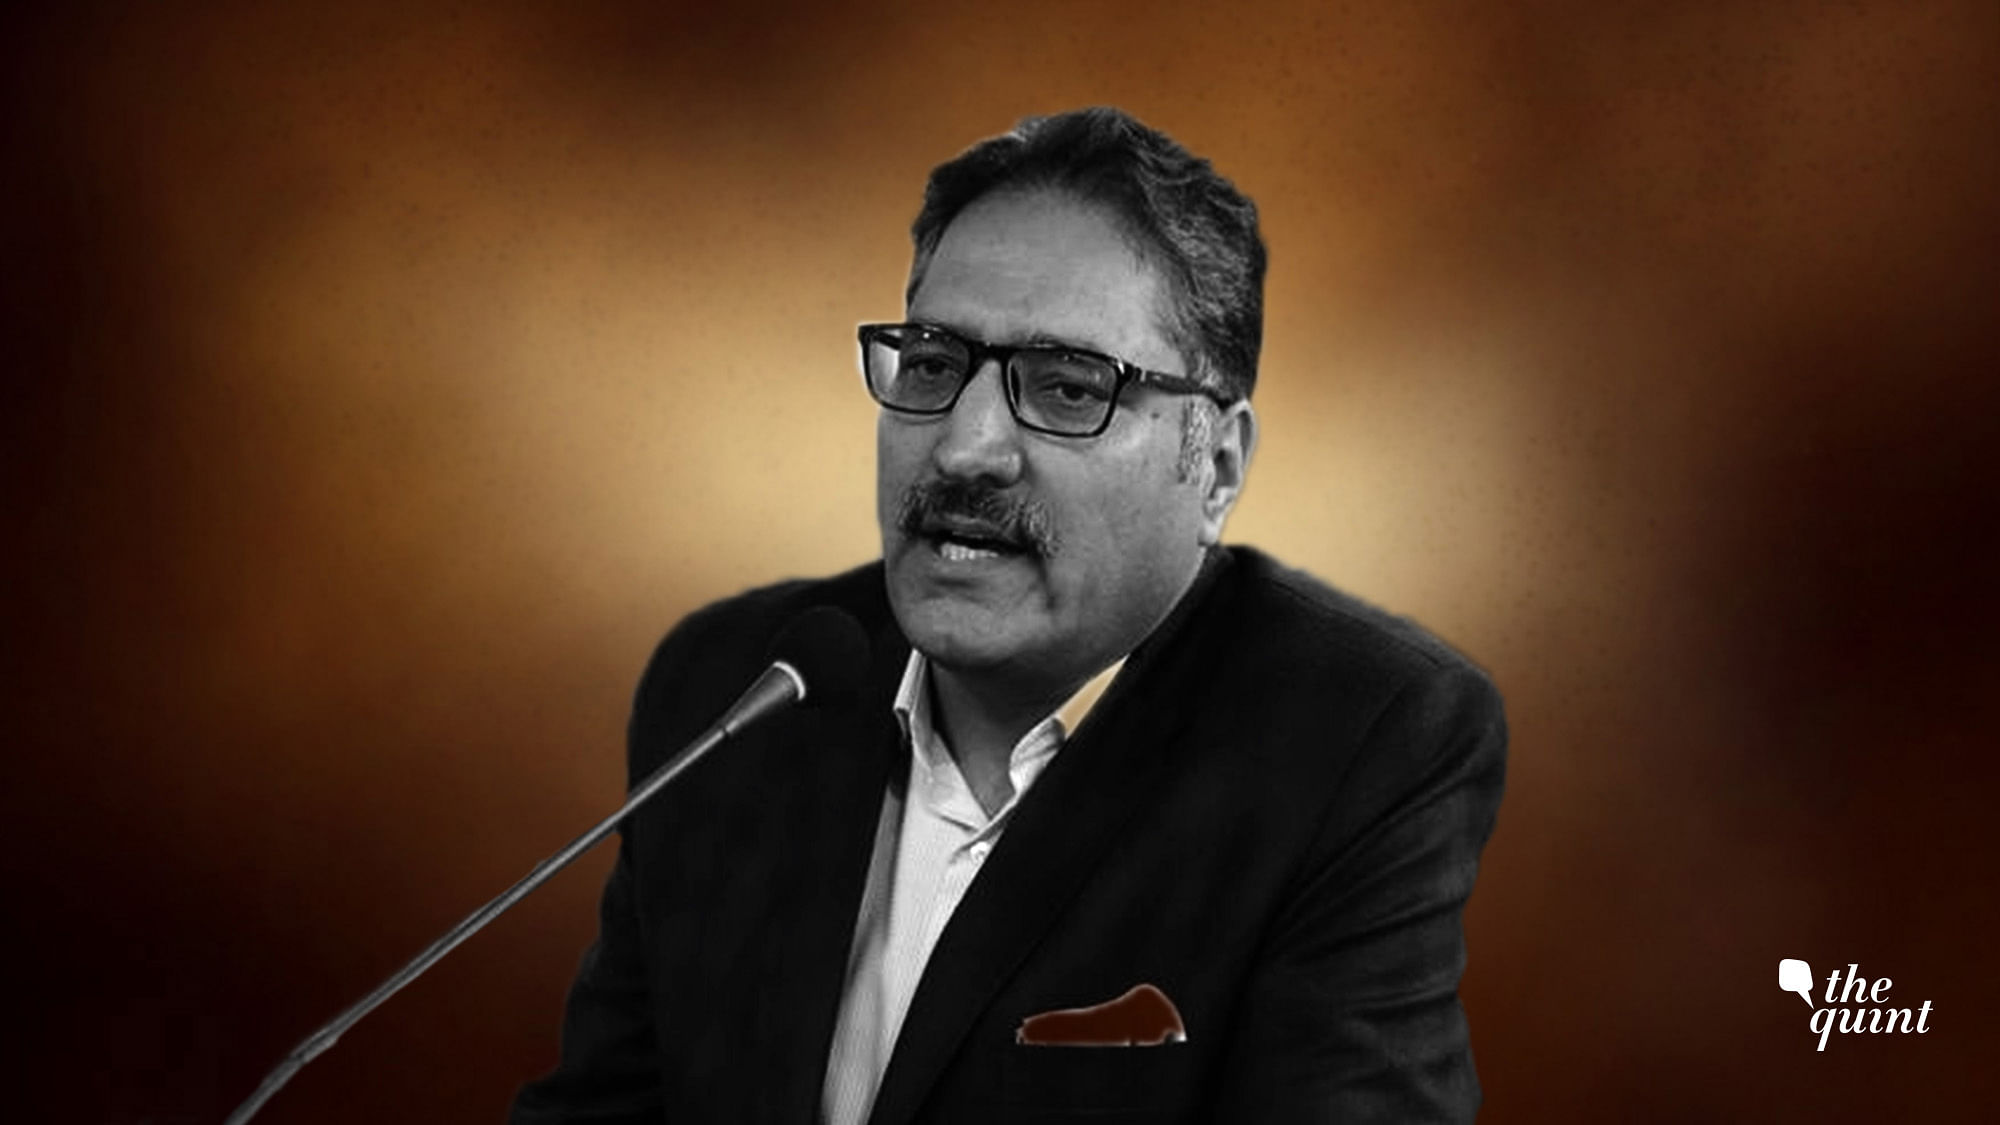 Senior journalist and editor of Rising Kashmir newspaper, Shujaat Bukhari was shot dead in Srinagar on 14 June.